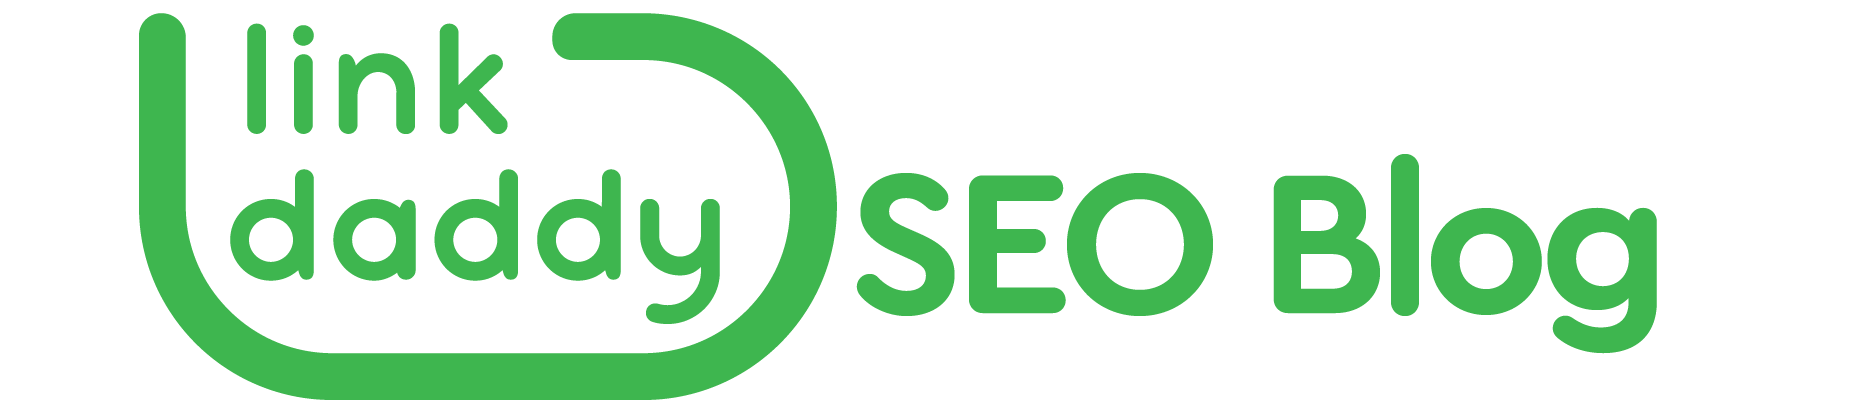 https://storage.googleapis.com/cloudsites/seo-services/866b172vt/img/cropped-linkdaddy-seoblog-logo.png